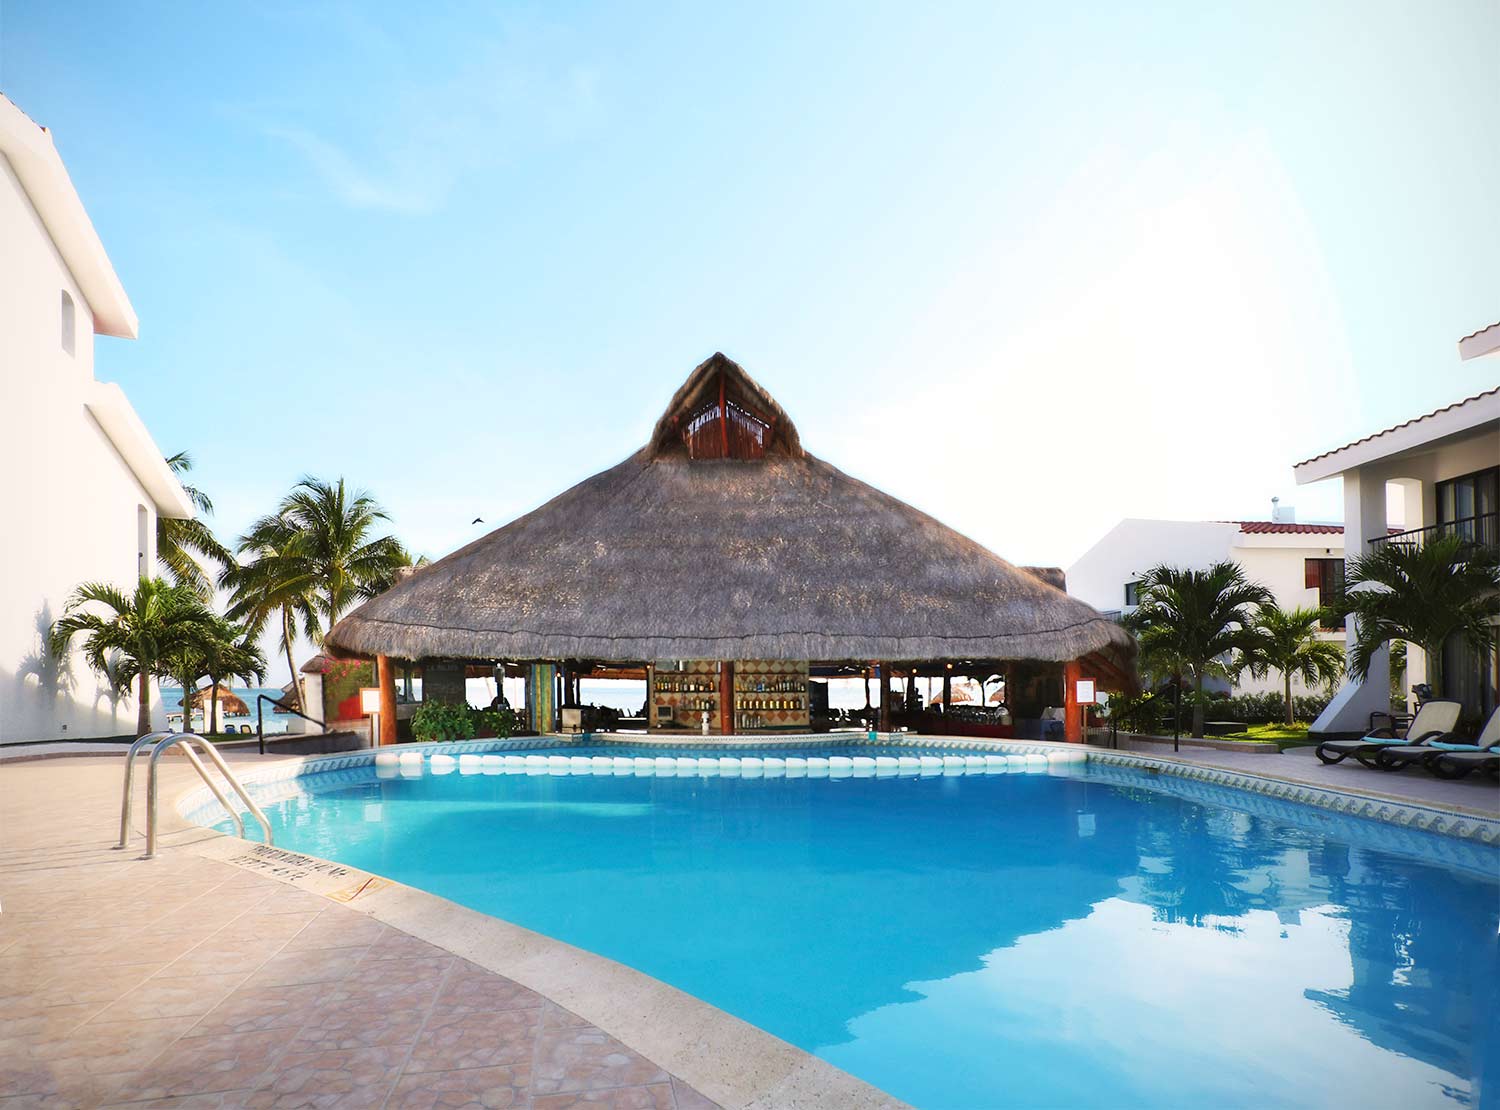 Royal Cancun Pool Bar and Pool